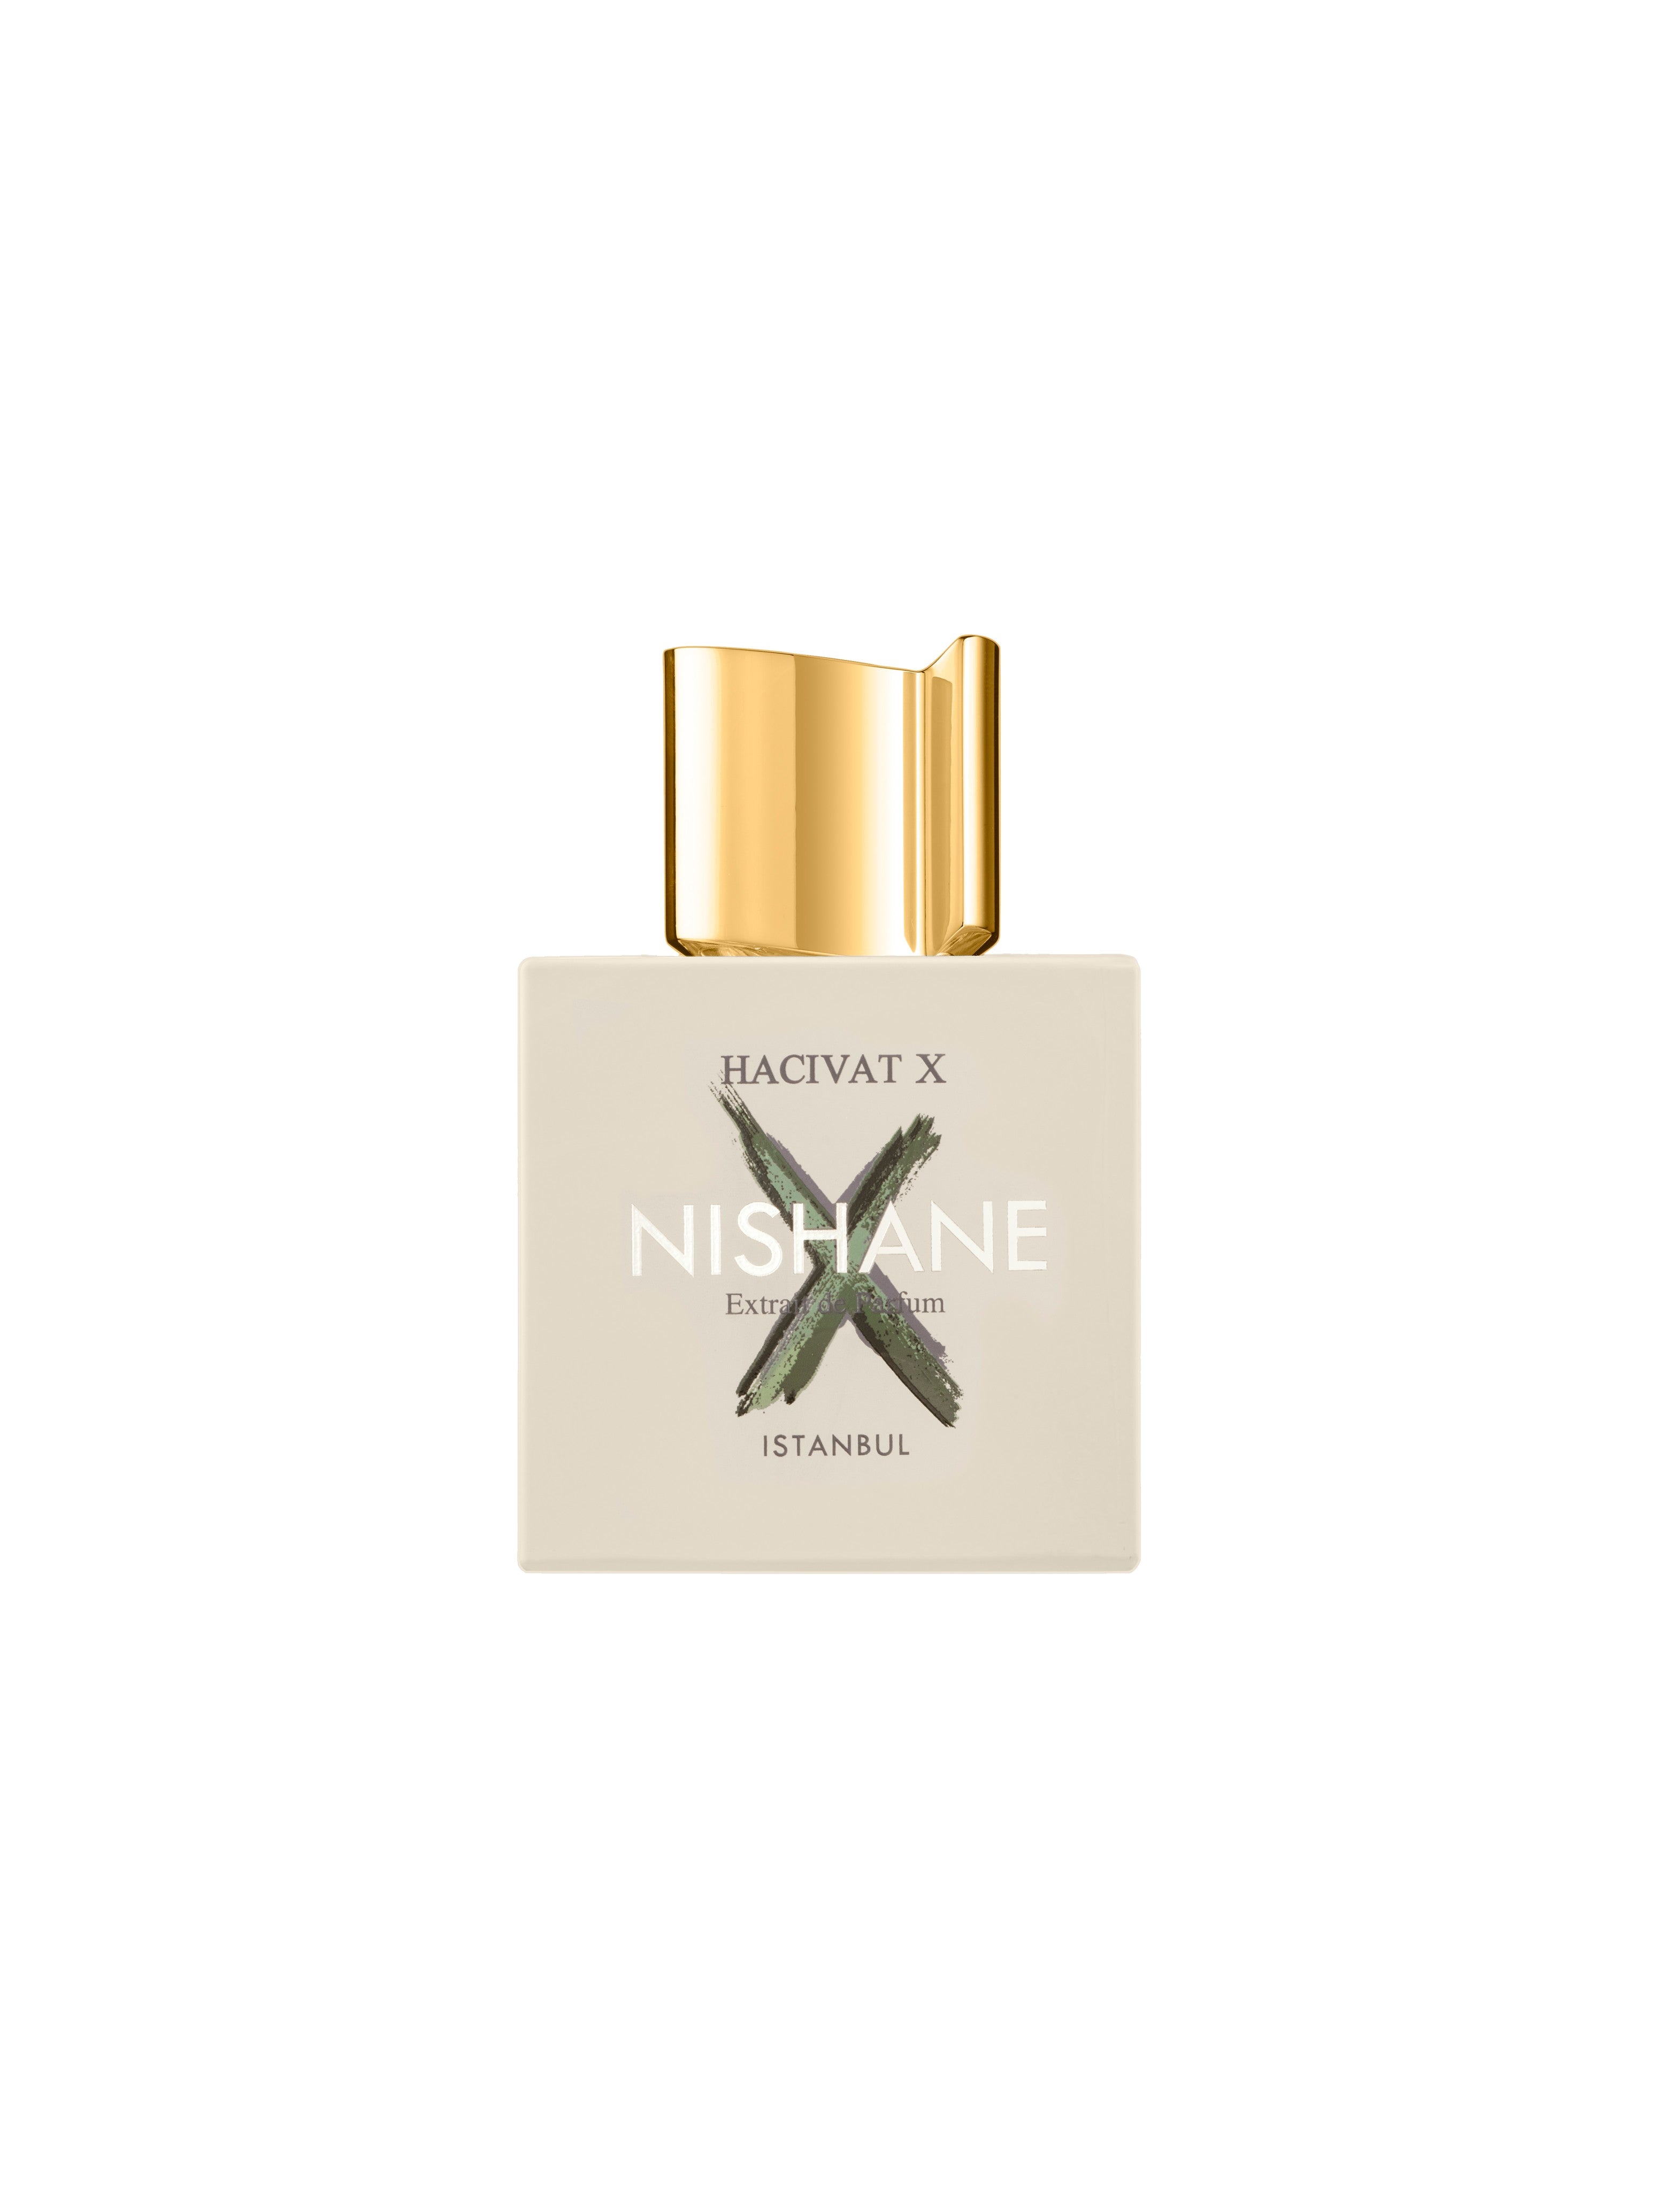 NISHANE Hacivat X Extrait de Parfum 100ML